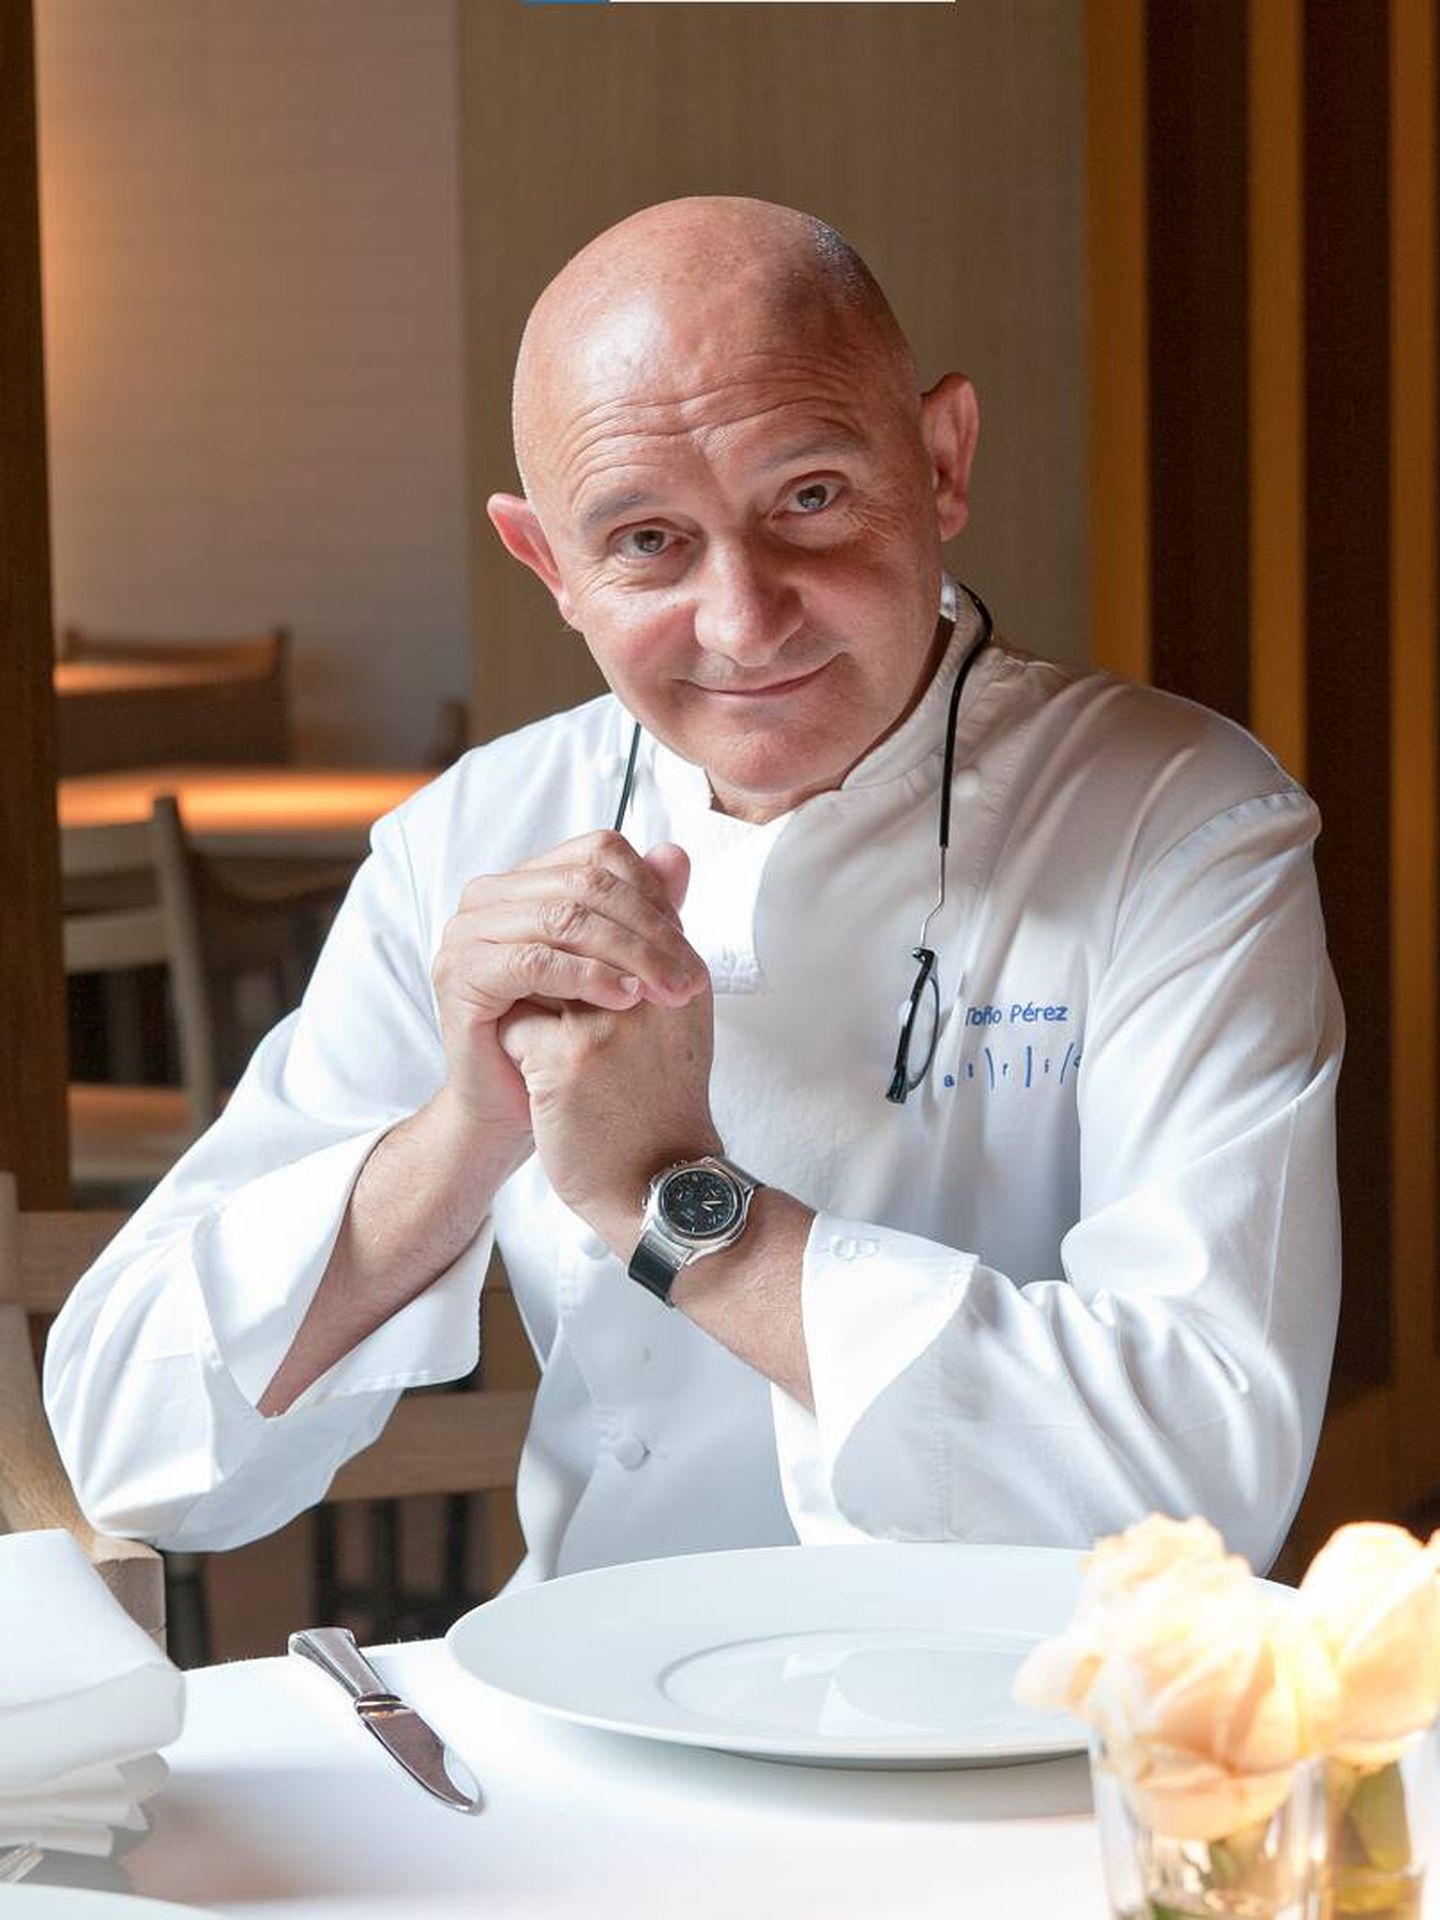 Toño Pérez, chef superlativo. (Cortesía)